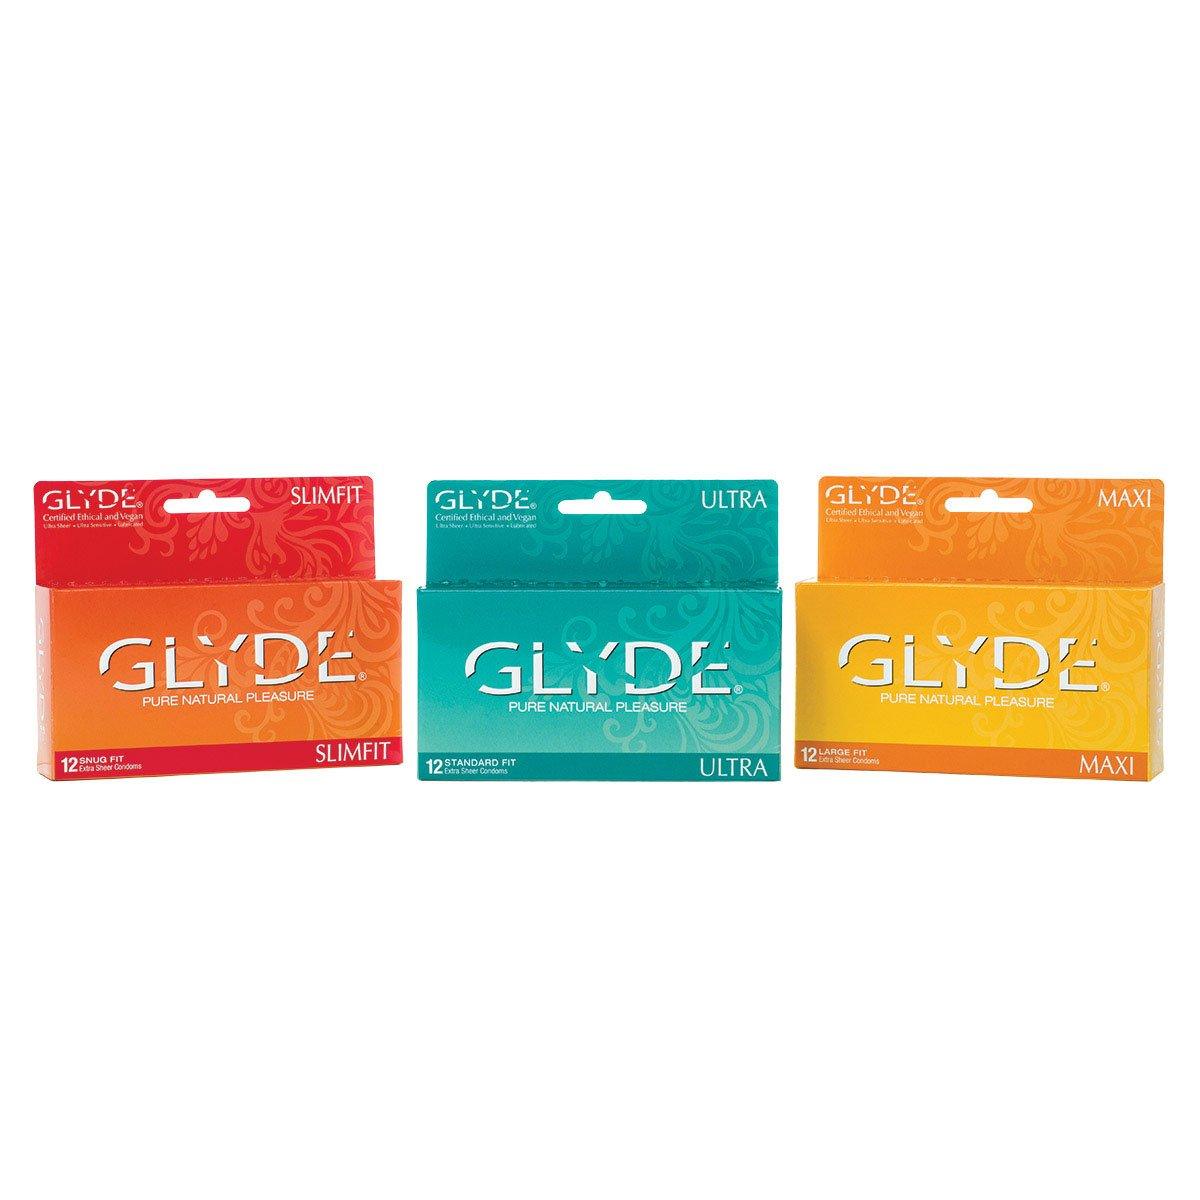 Glyde Ultra Condoms 12pk - shop enby